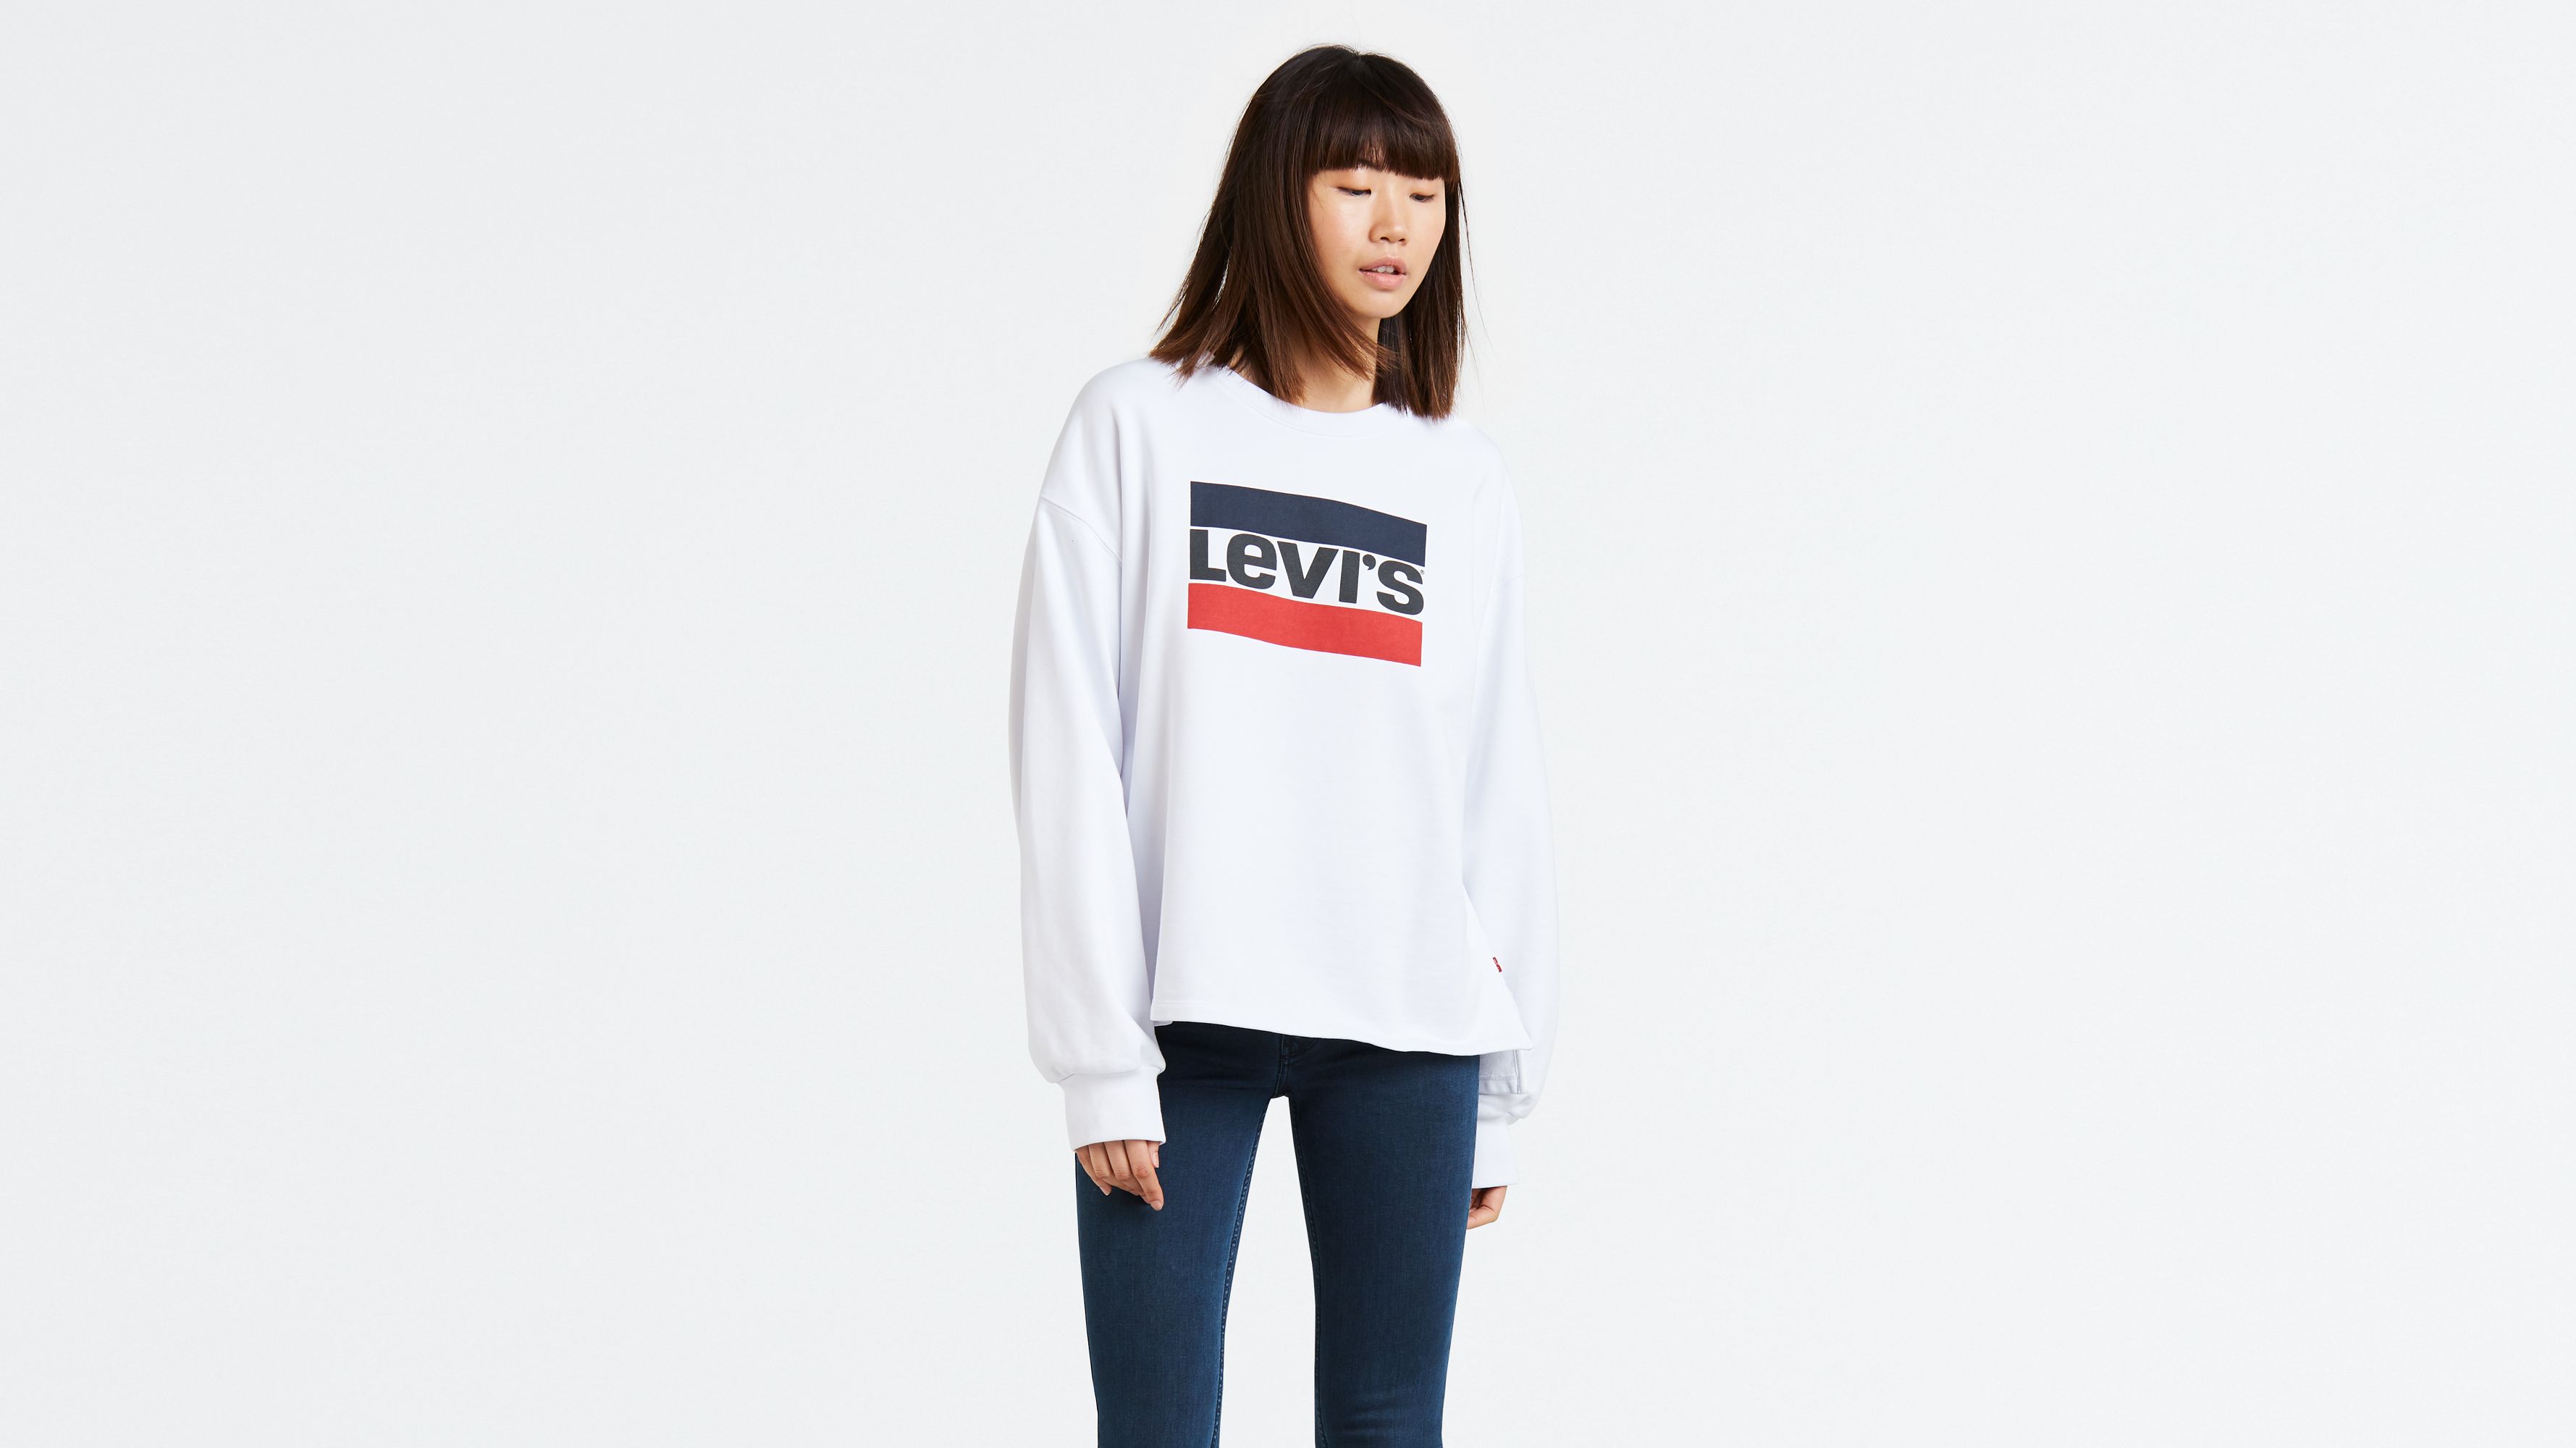 levis graphic big sleeve sweatshirt